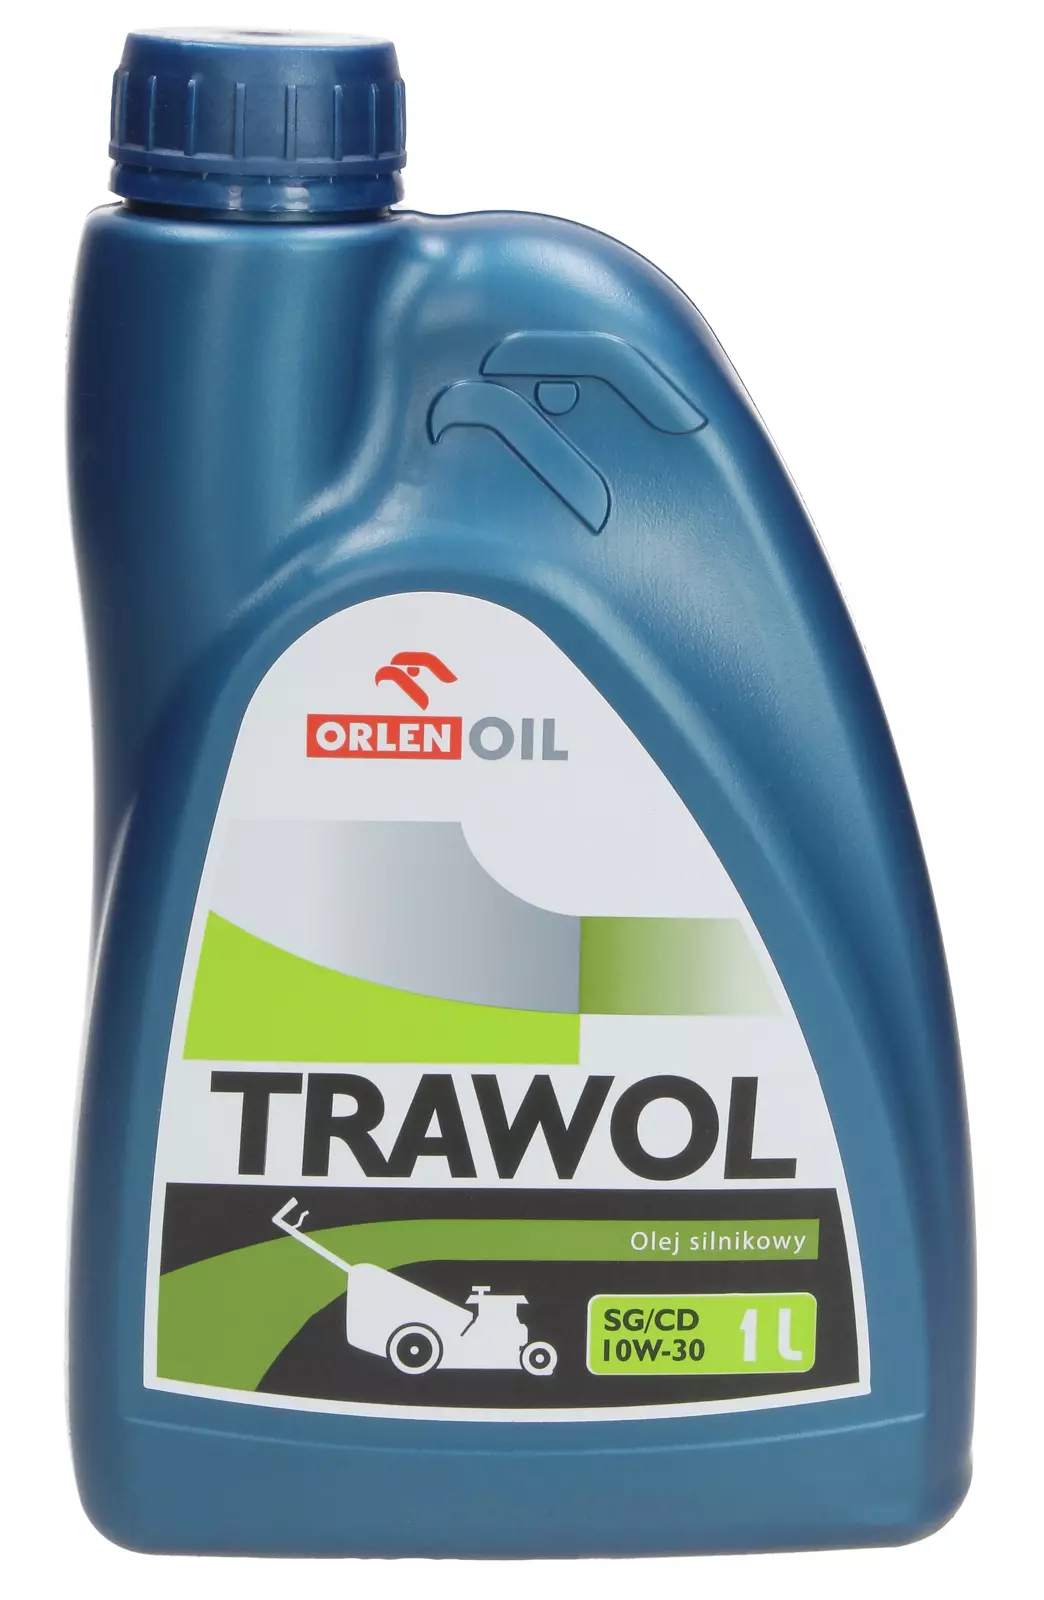 ORLEN TRAWOL 10W-30 масло для газонокосилок 1 л